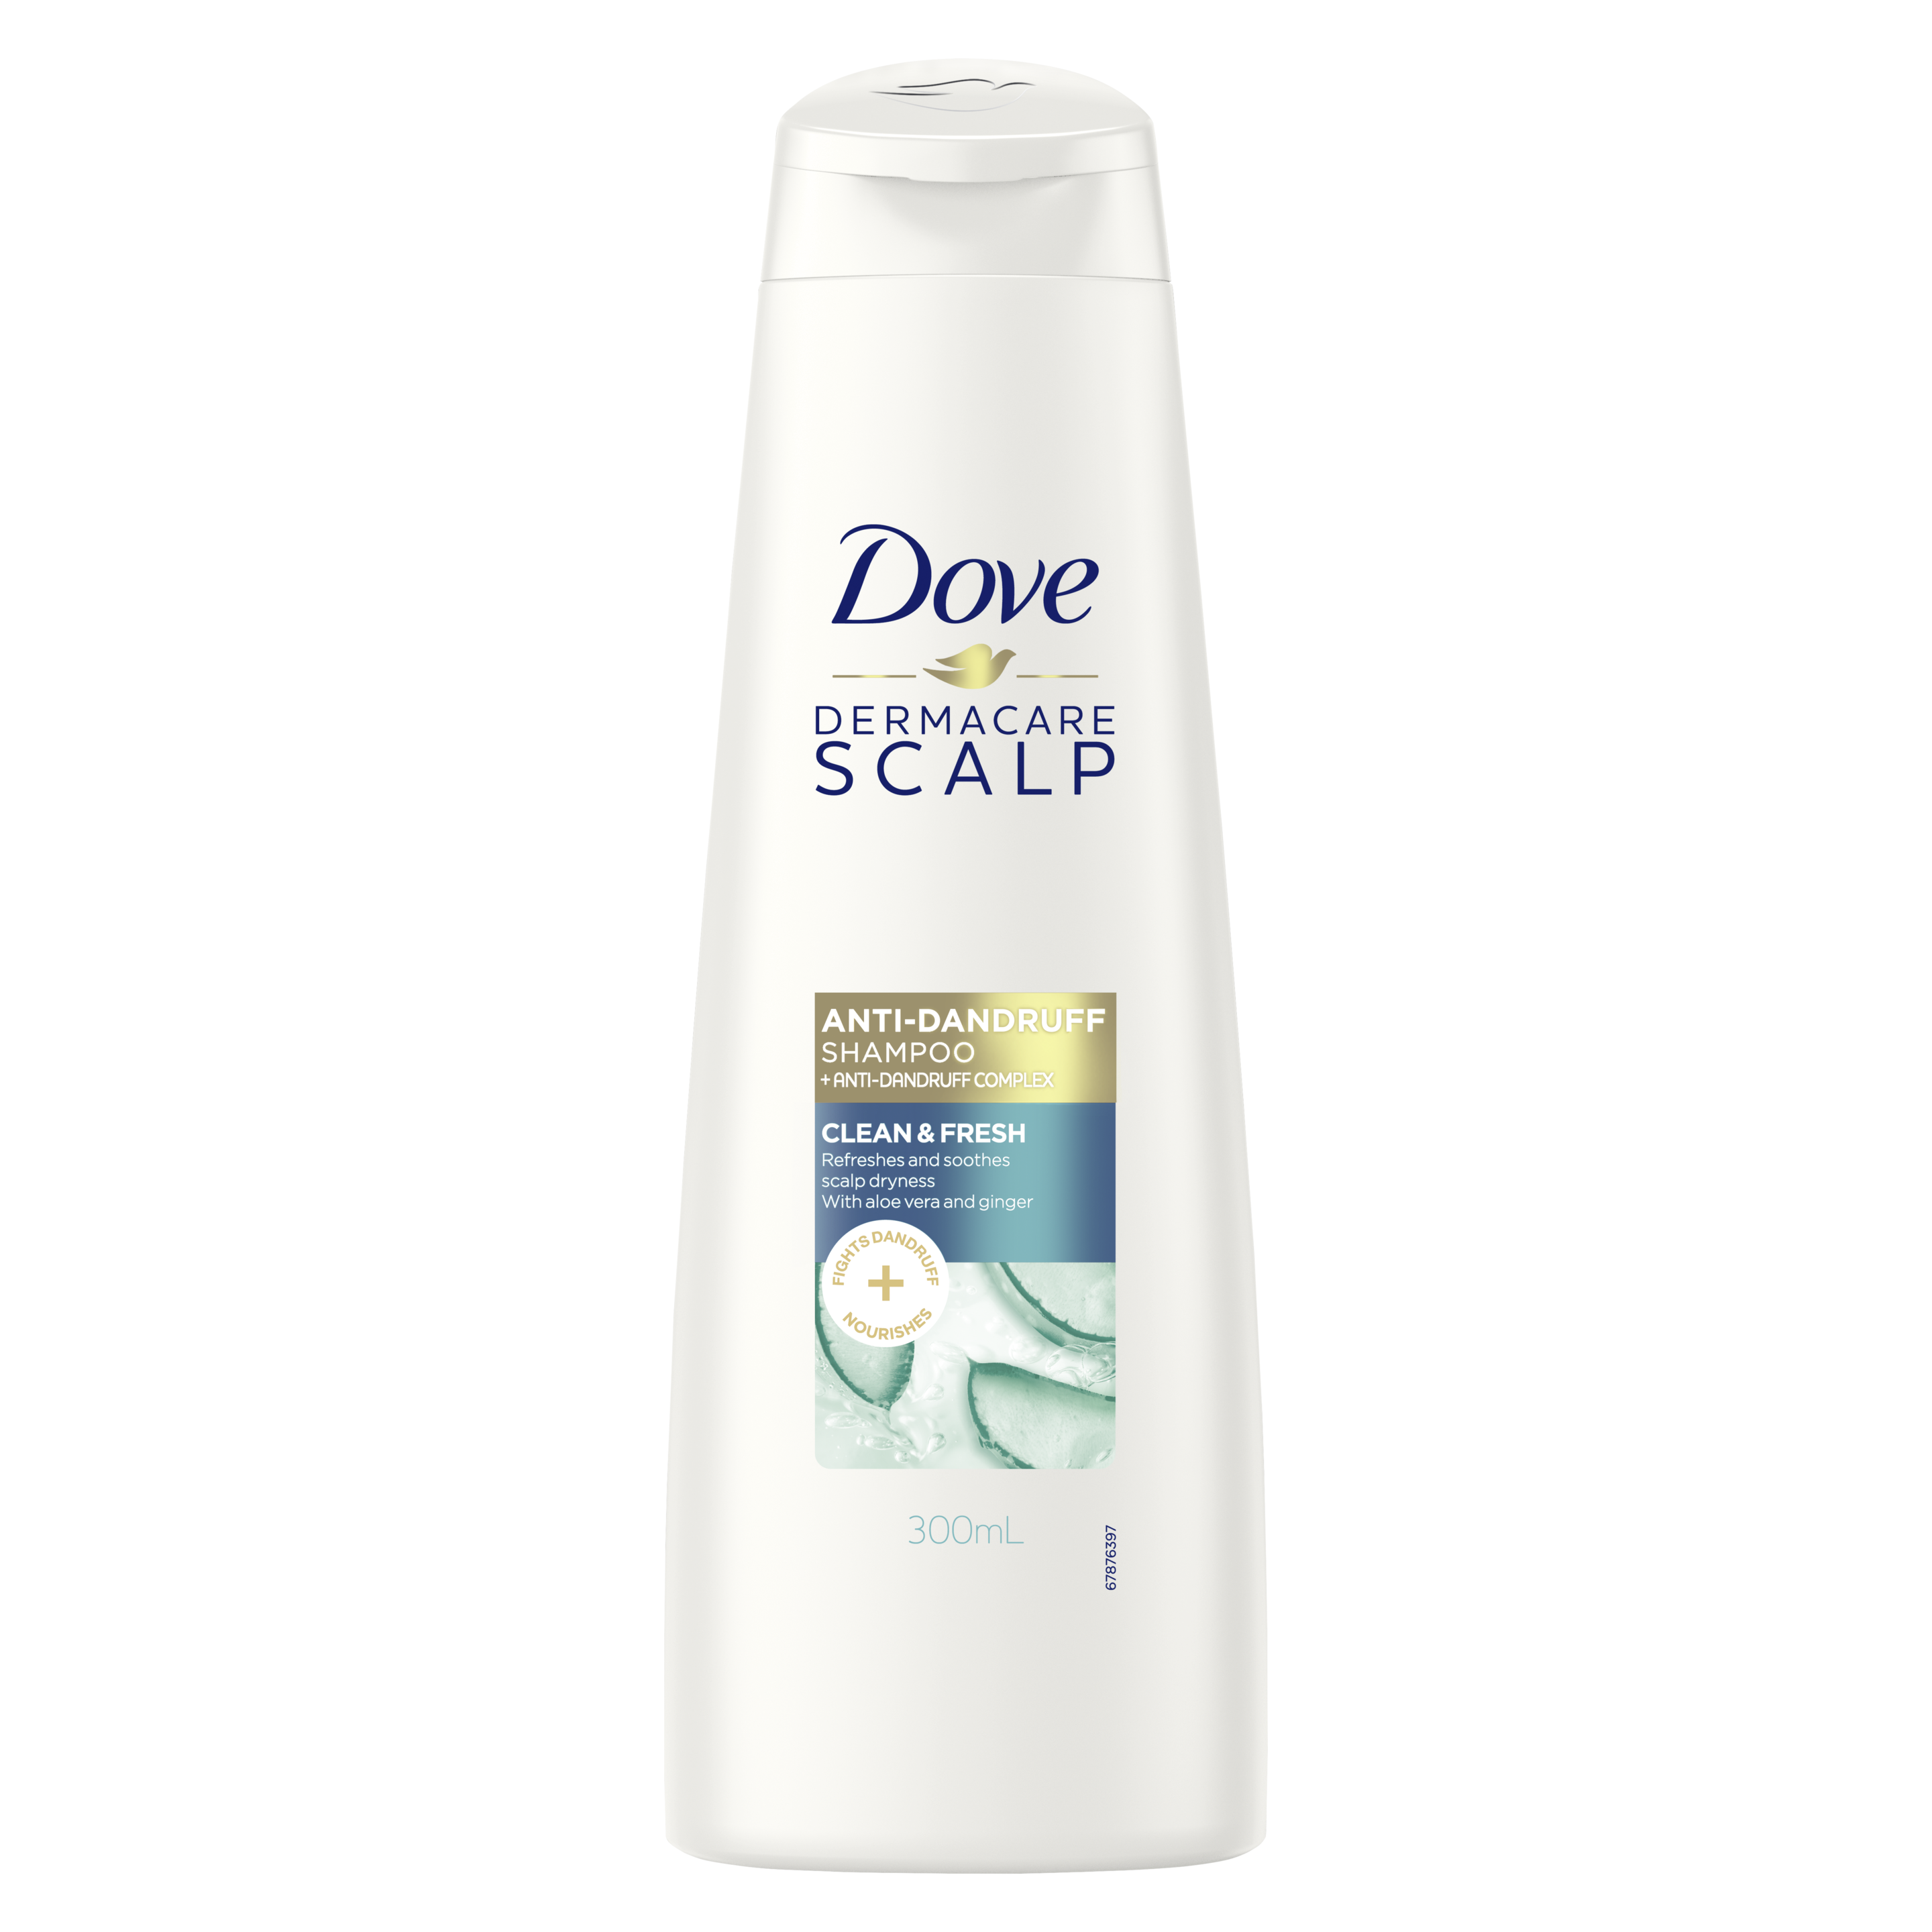 Clean And Fresh Anti Dandruff Shampoo Text